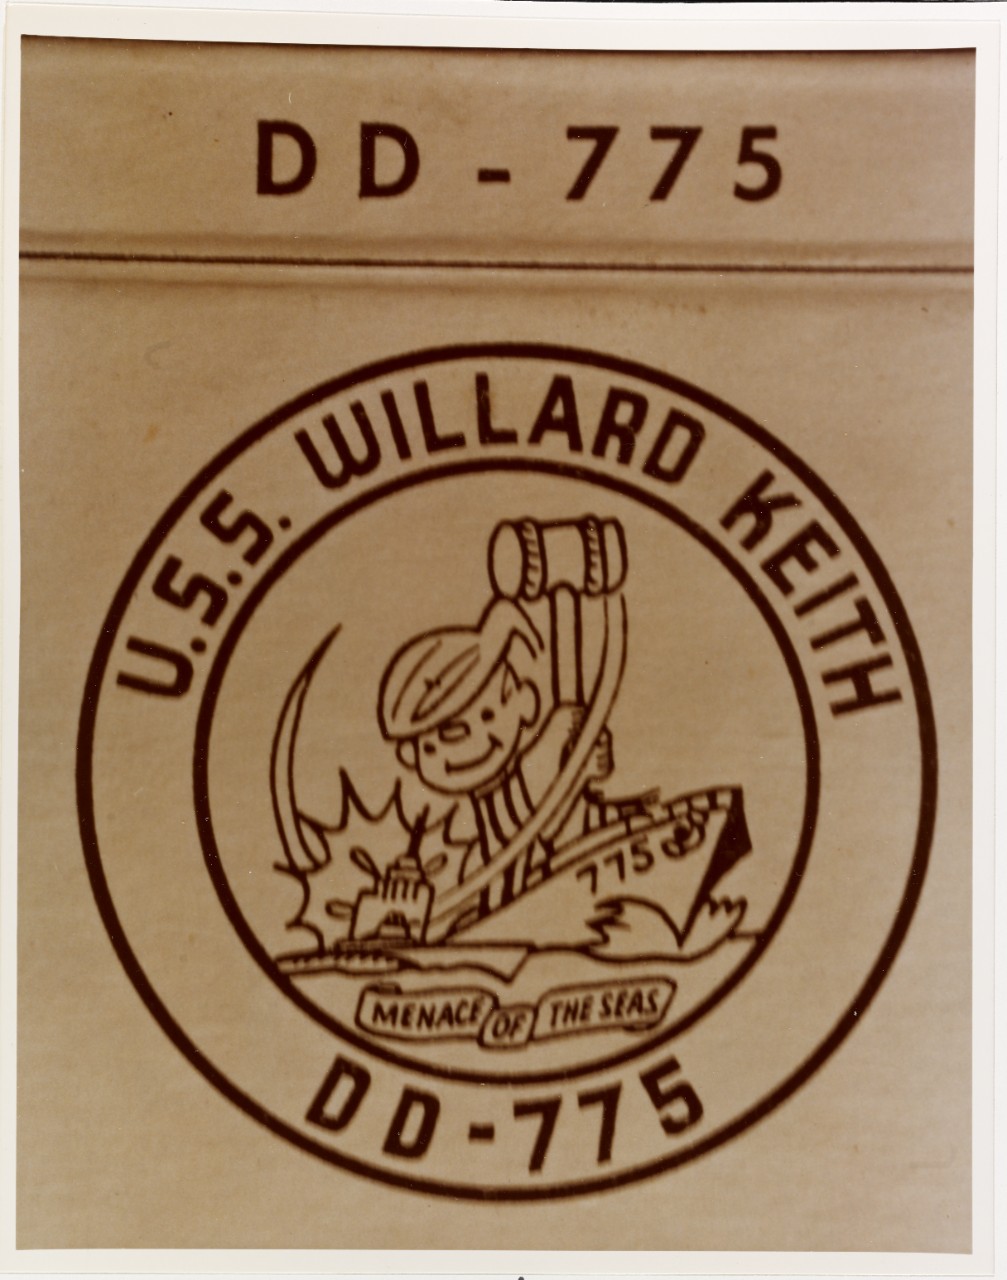 Insignia: USS WILLARD KEITH (DD-775)